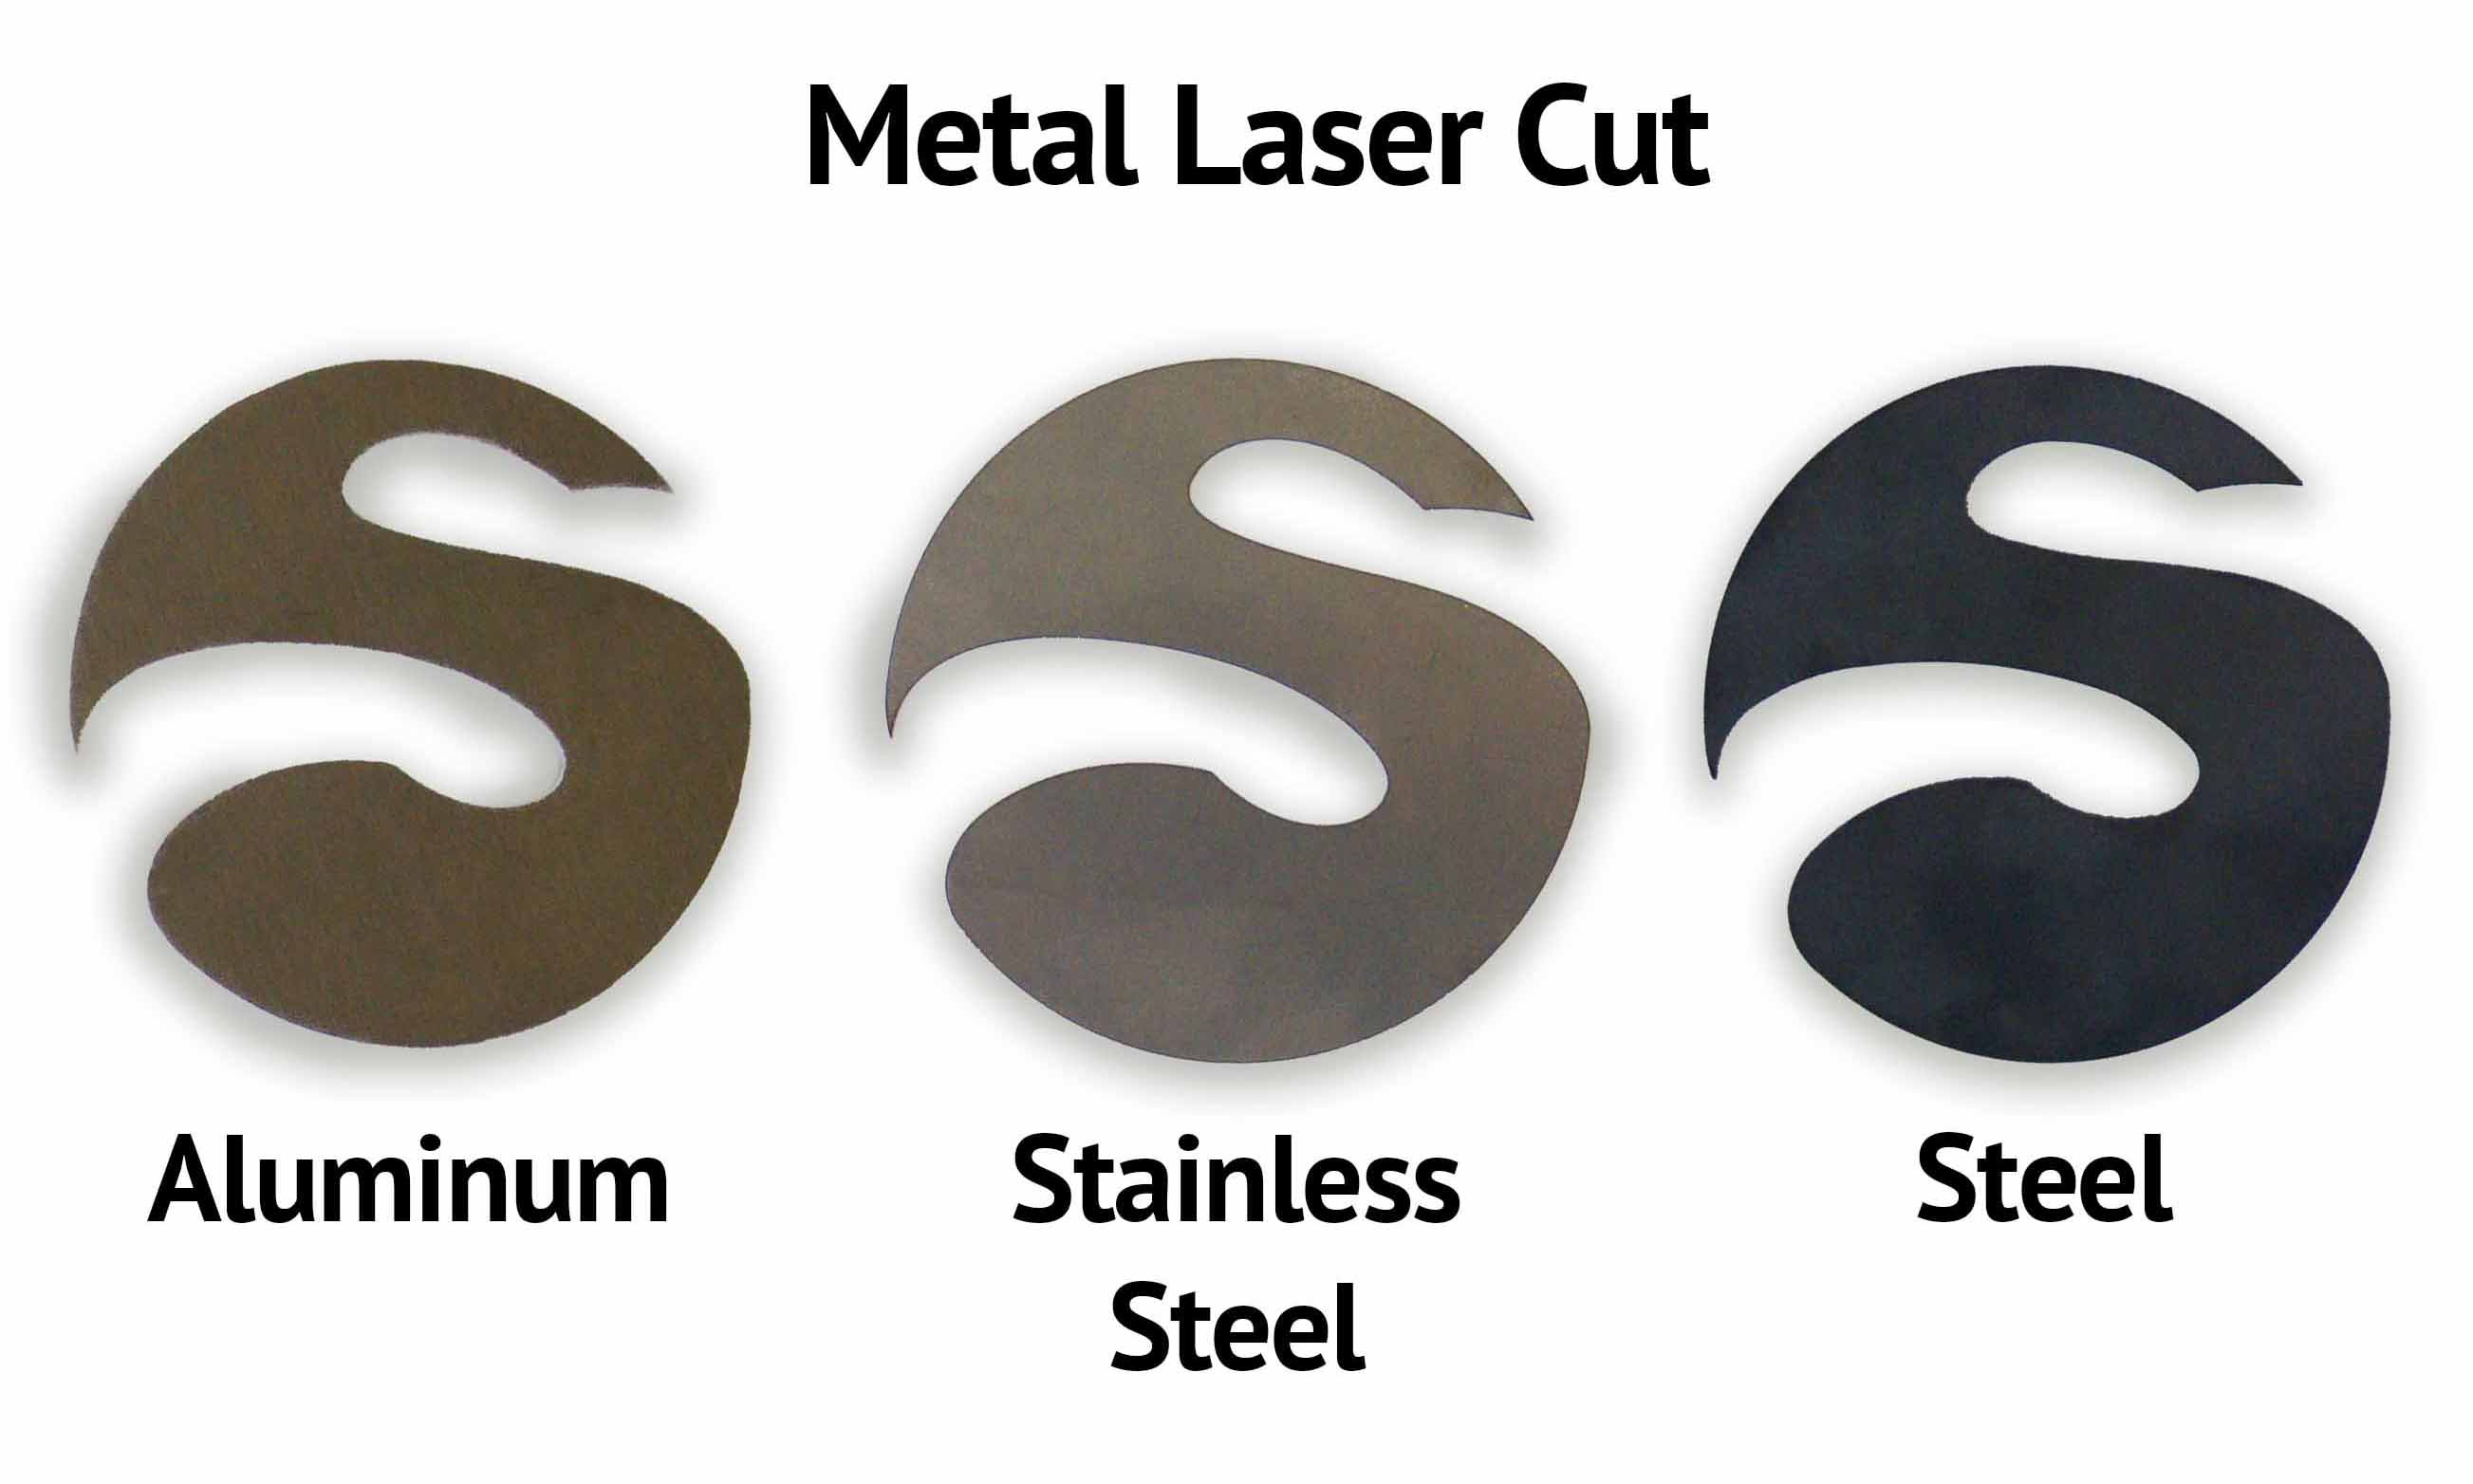 Sculpteo’s Laser Cut Metal Service | Sculpteo Blog